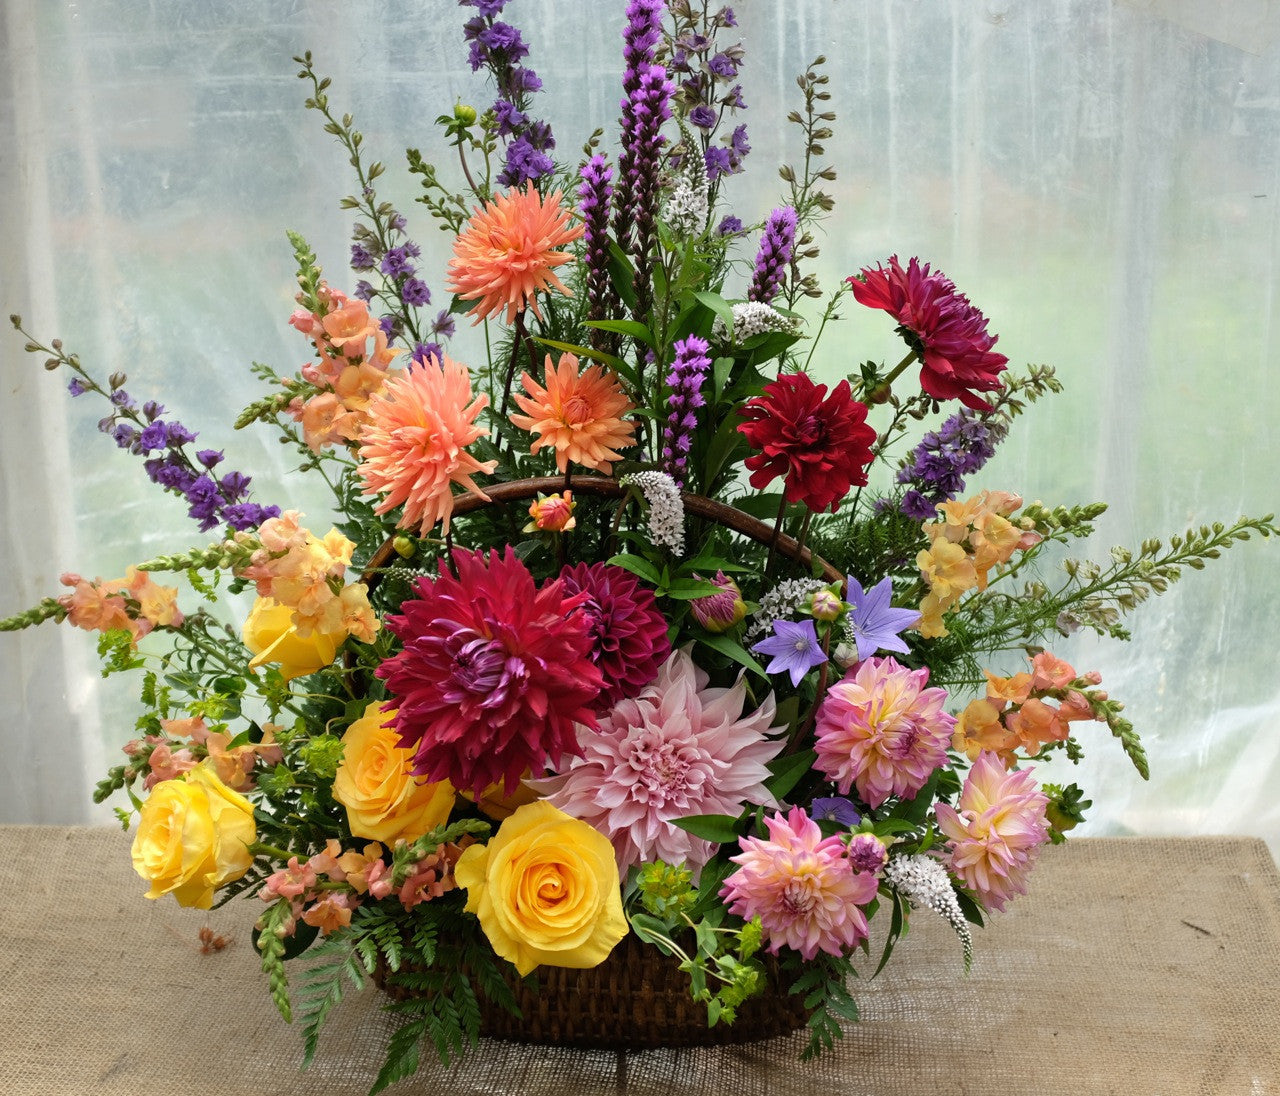 Large Colorful Funeral Flower Basket with Dahlias, Liatris, Larkspur, and Roses | Michler's Florist